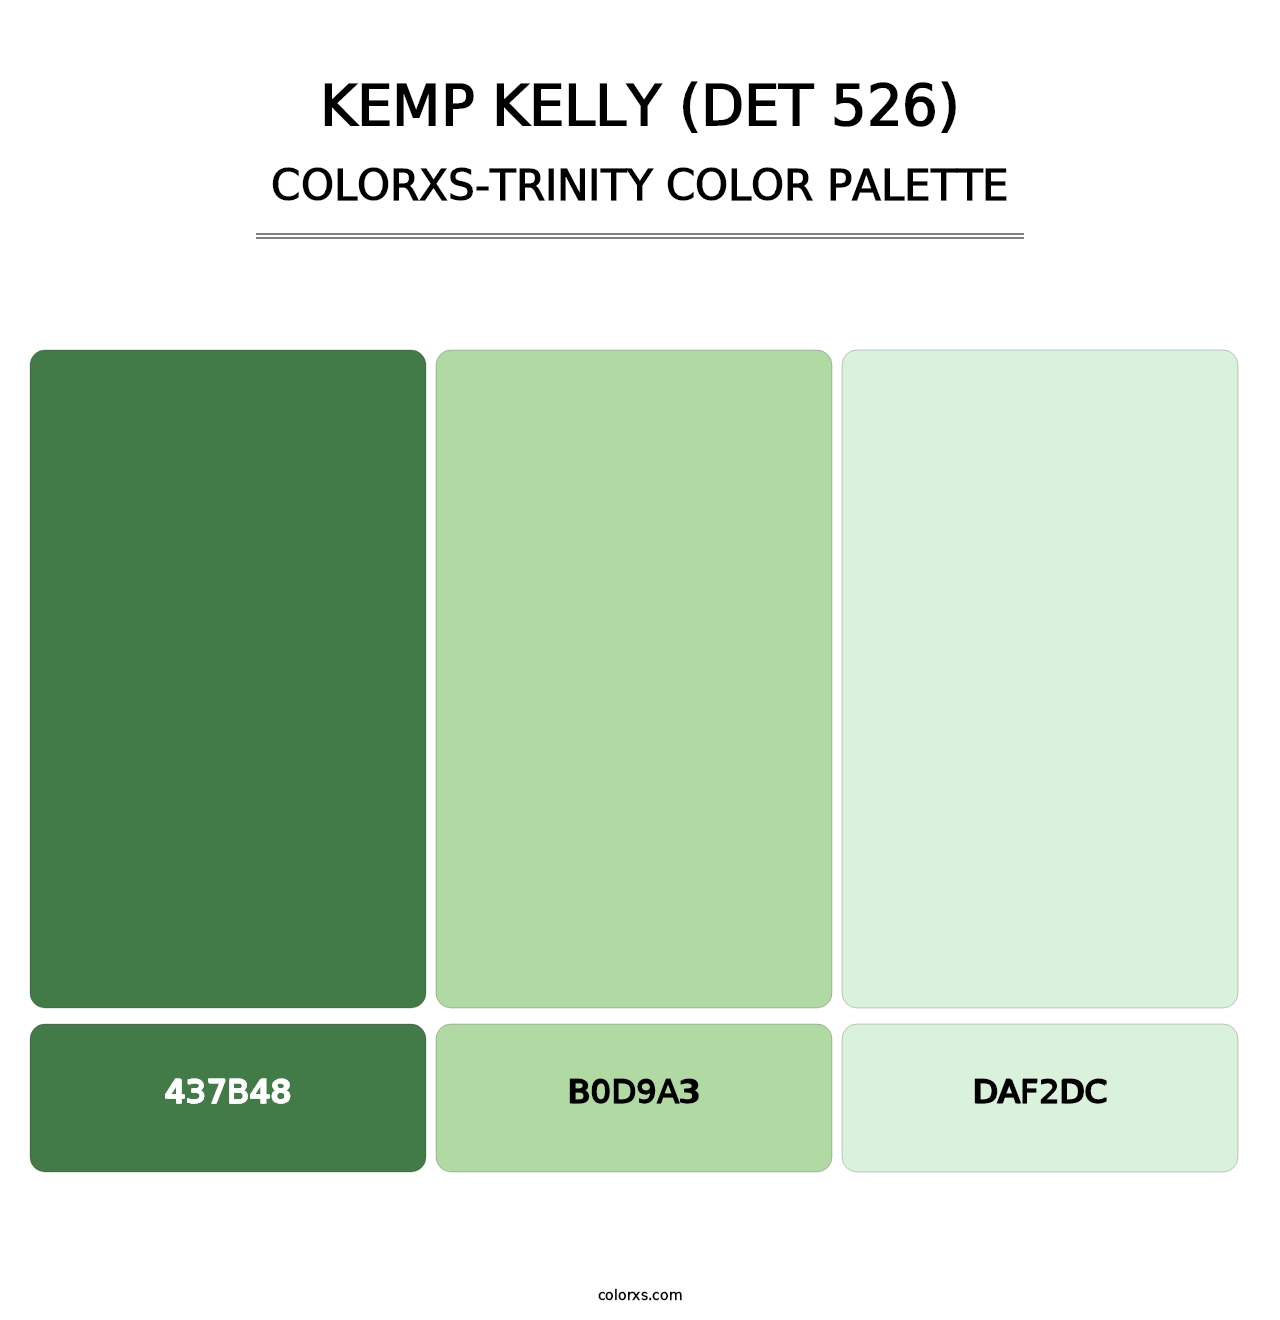 Kemp Kelly (DET 526) - Colorxs Trinity Palette